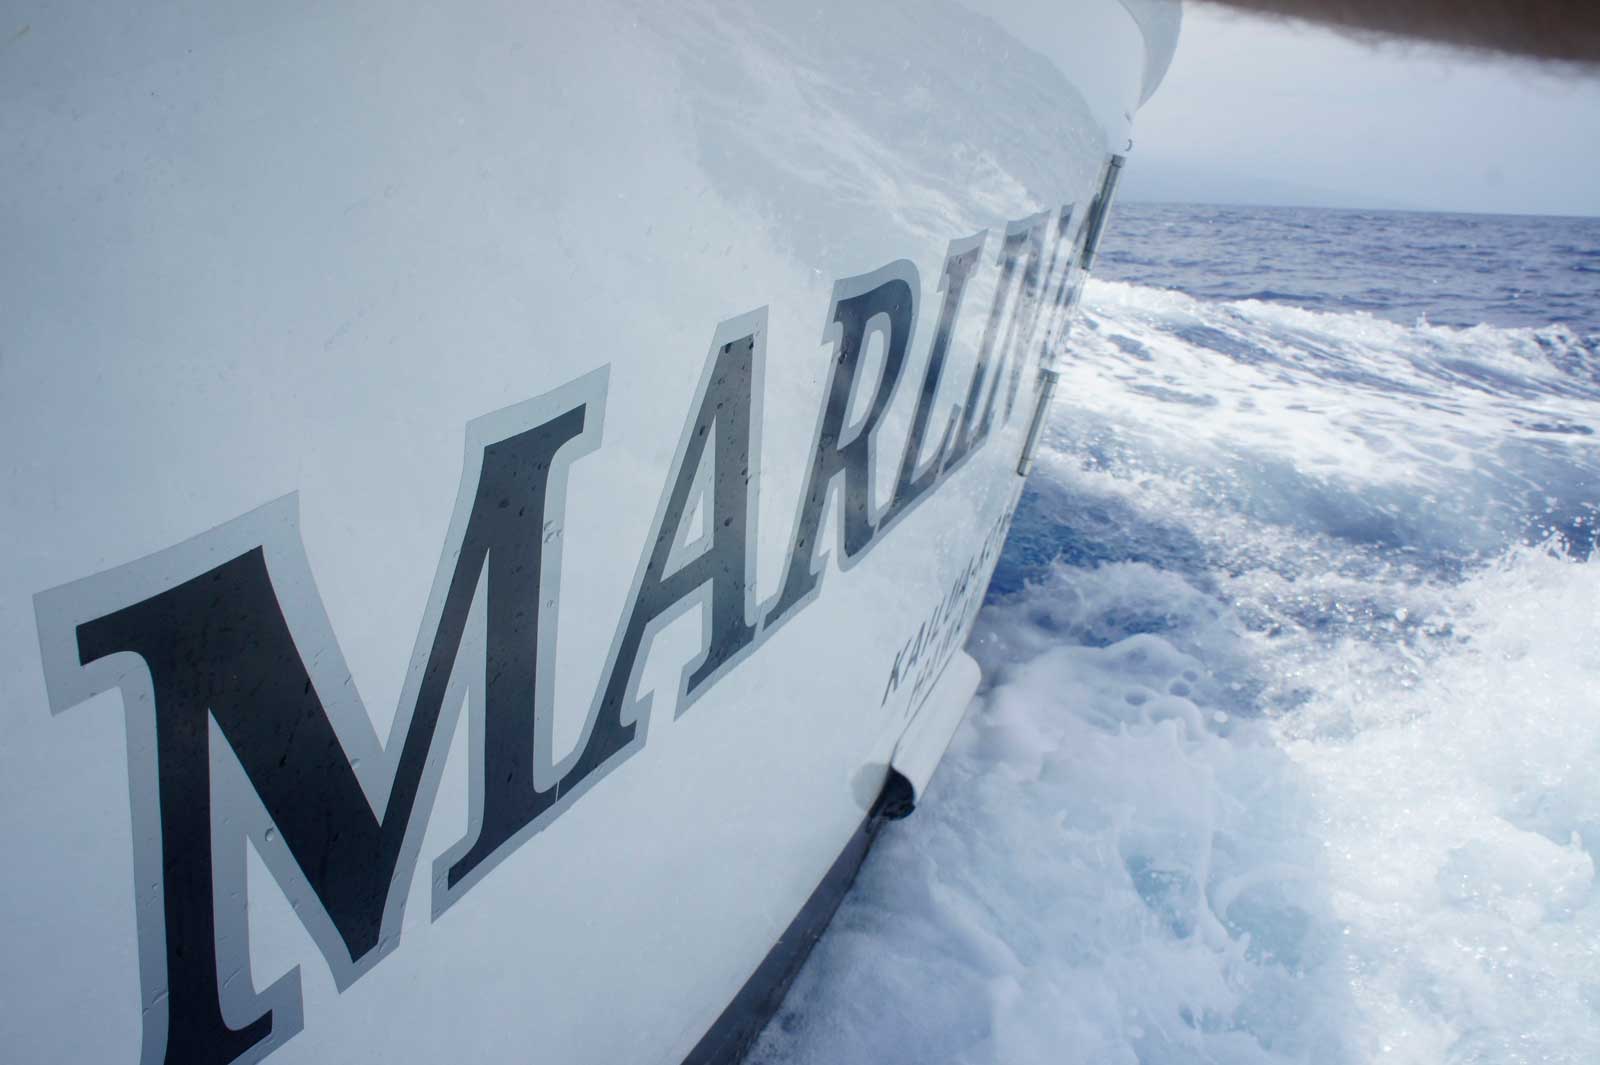 Marlin Grando Family Fishing Charter Boat Name on Boat